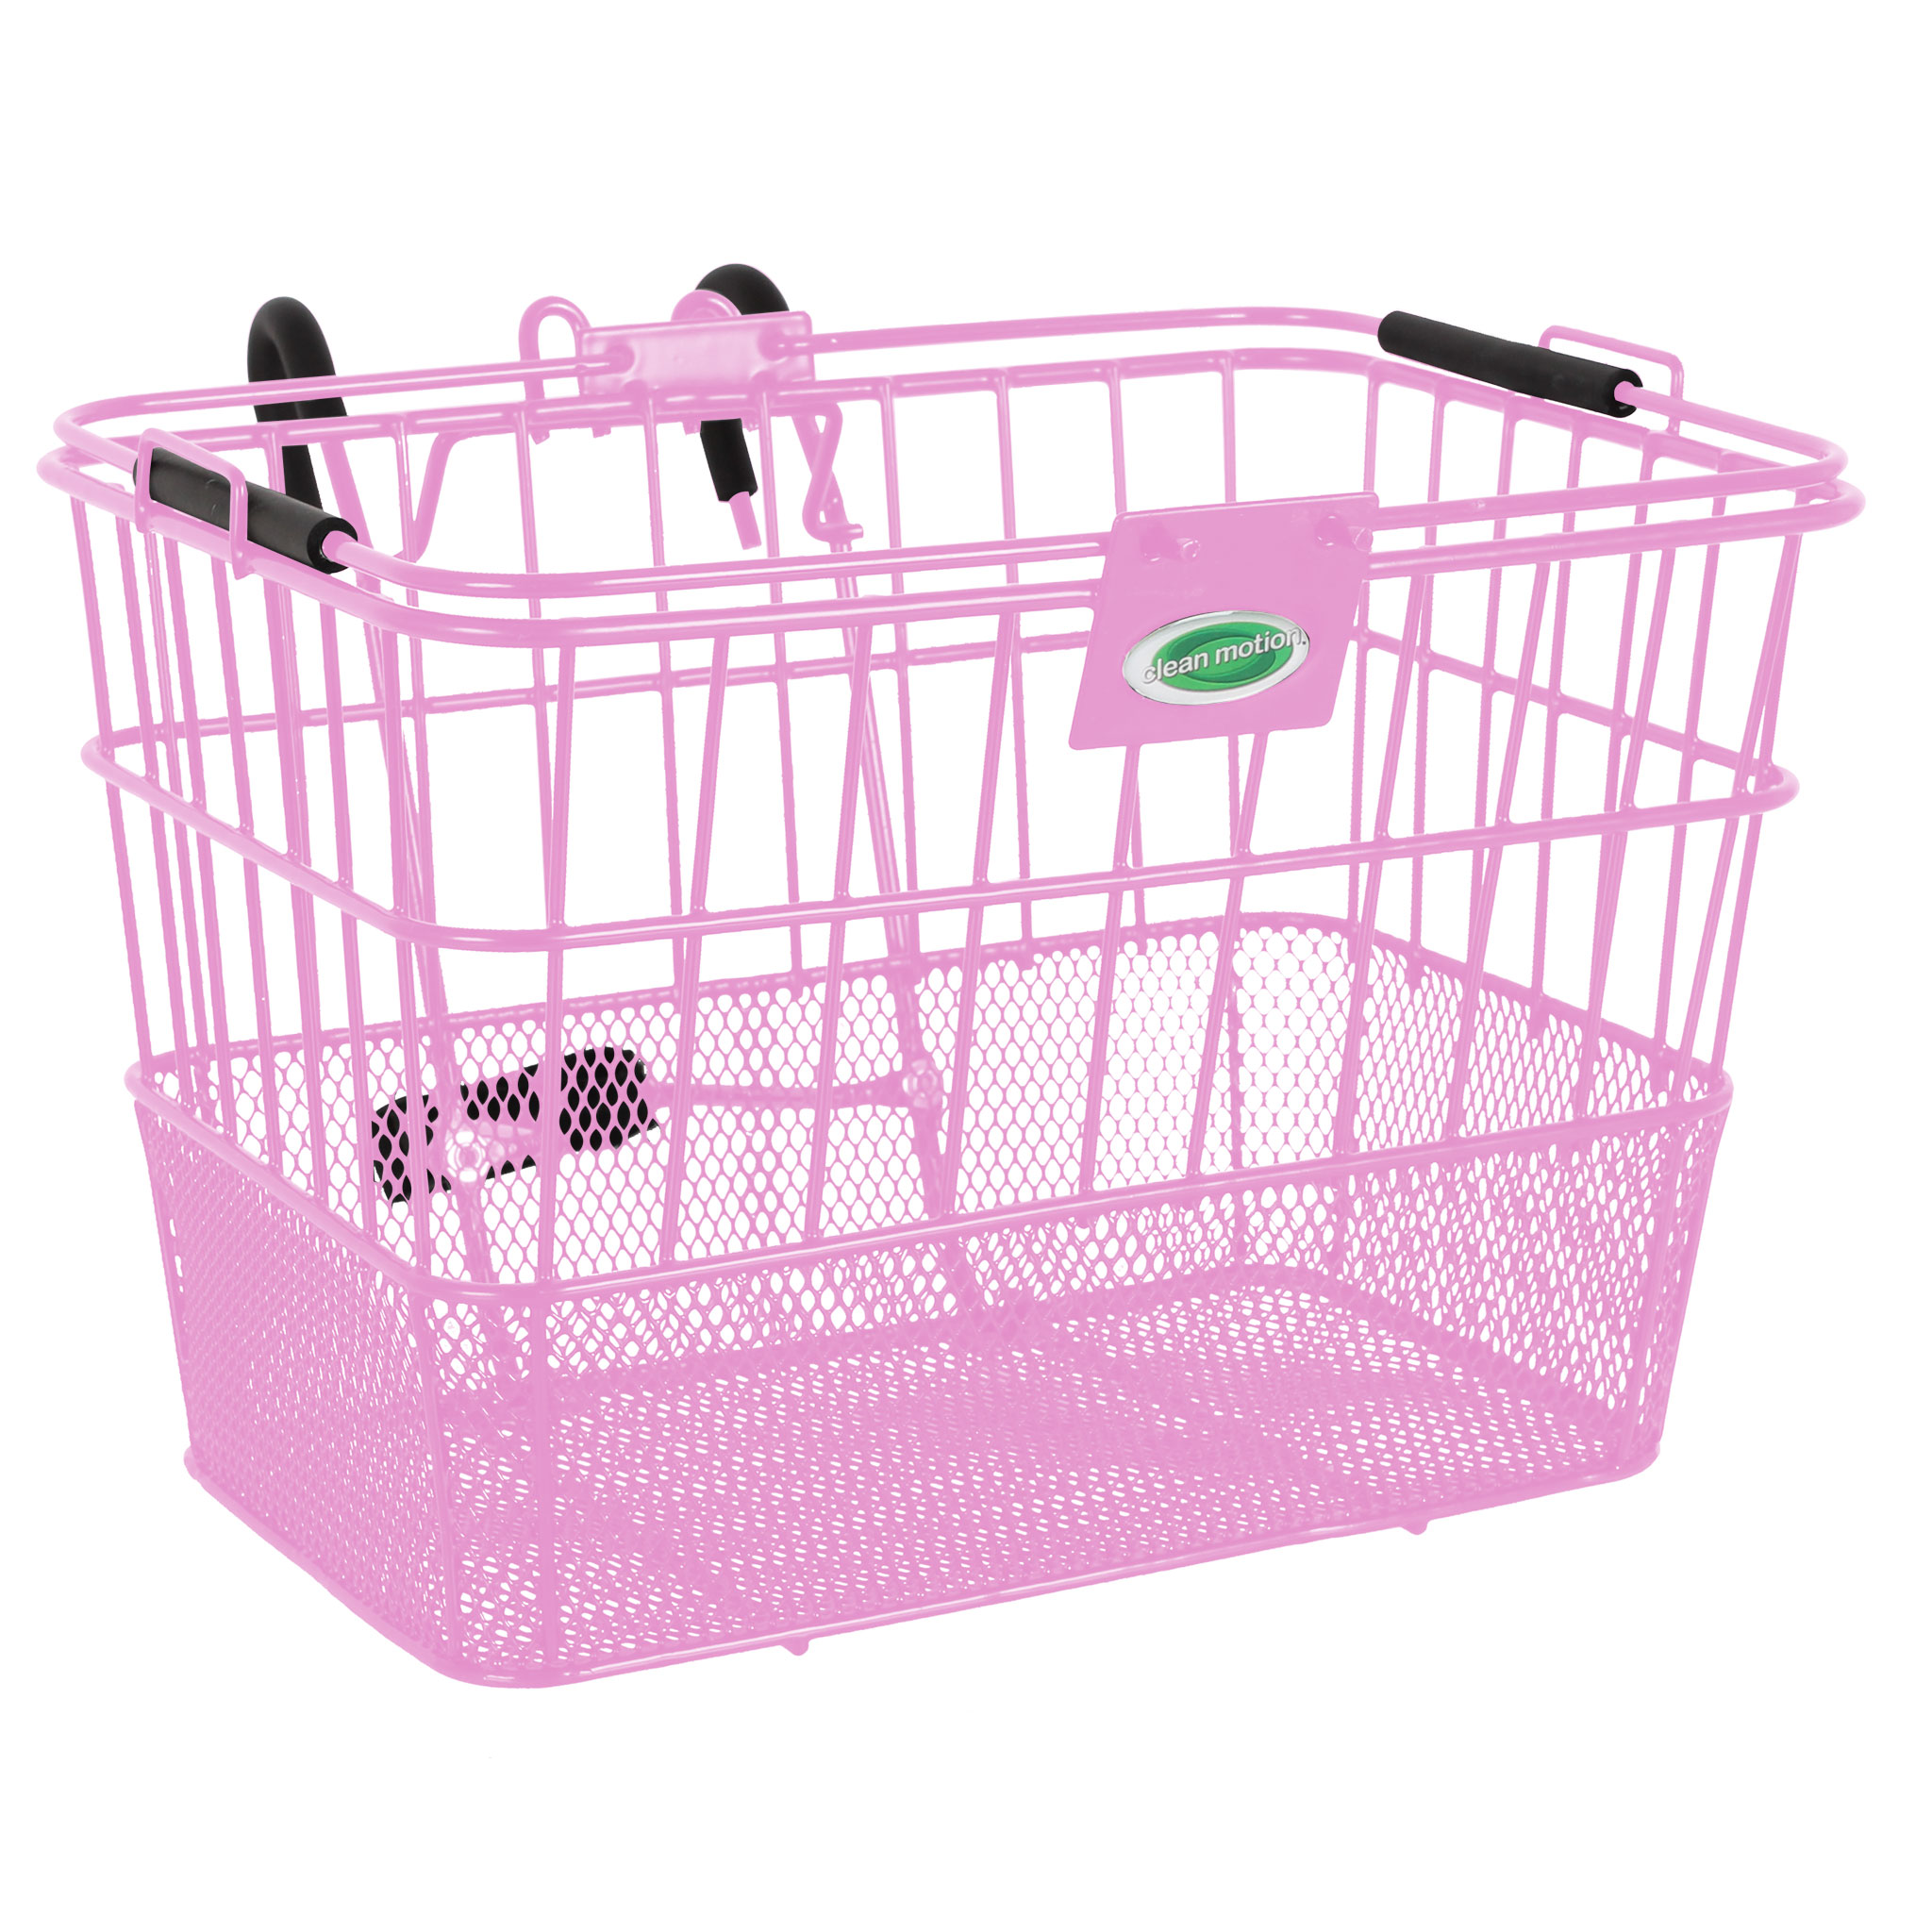 Clean Motion Quik Release Basket, Pink 